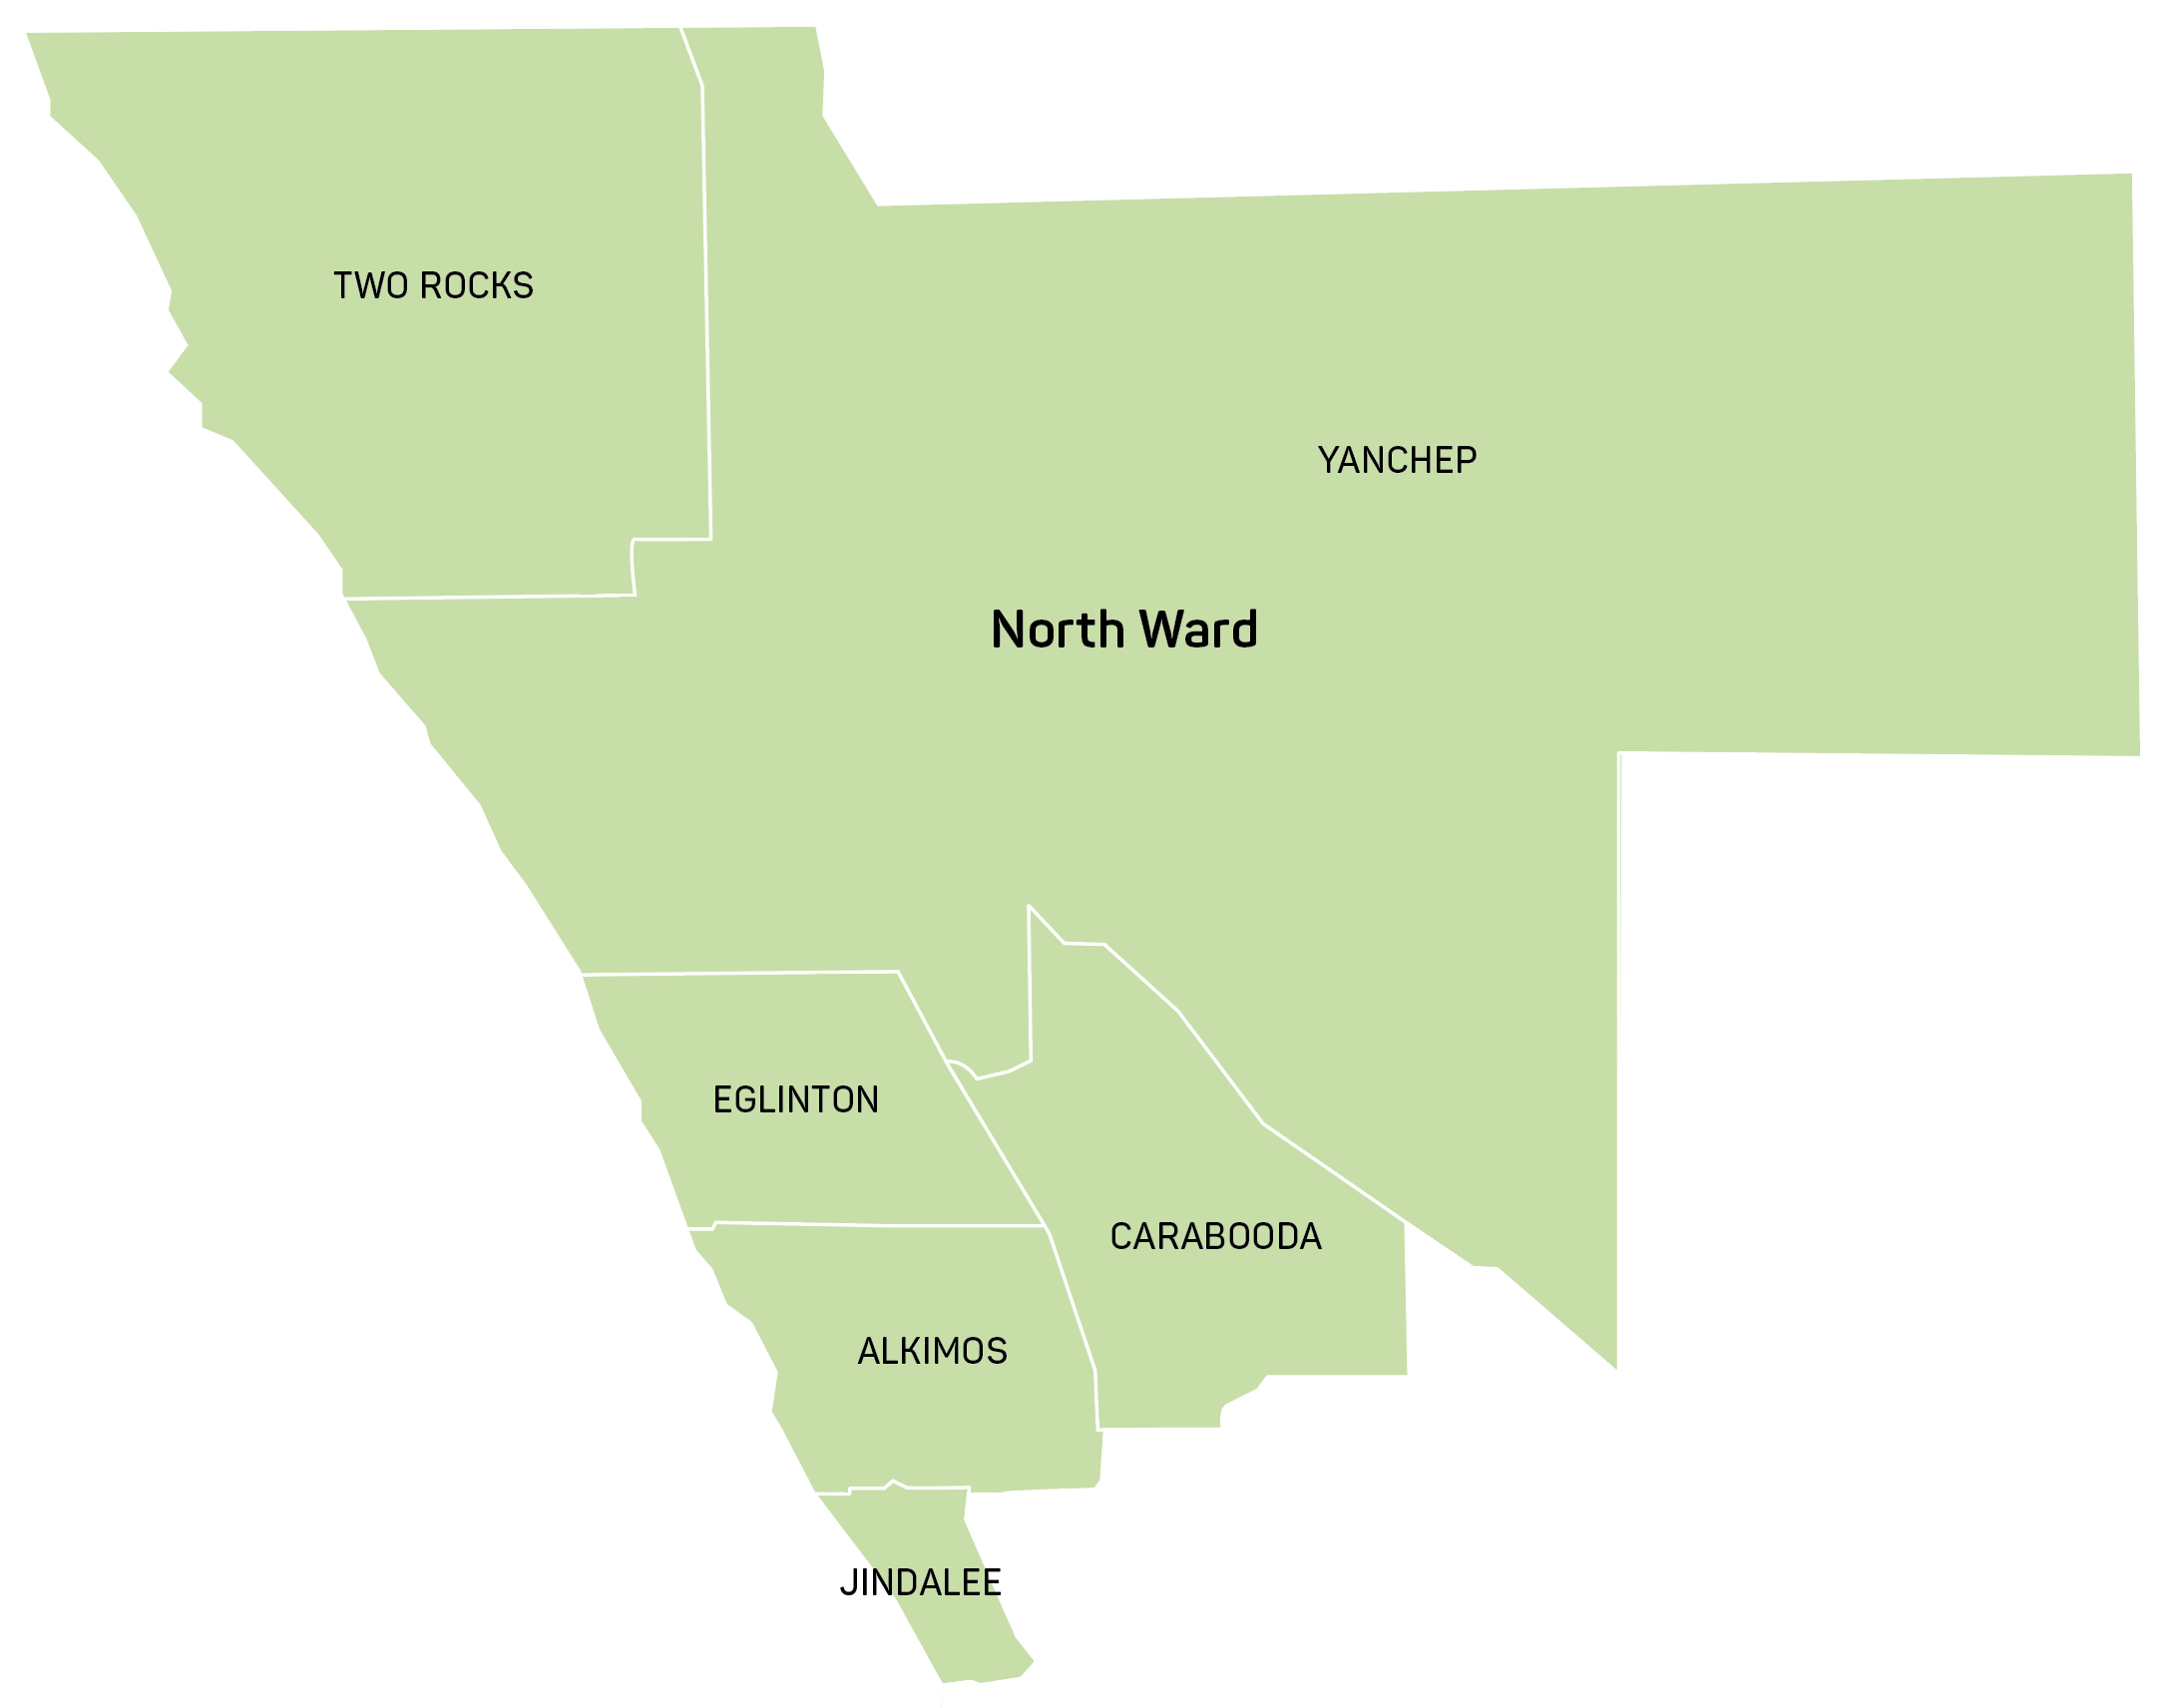 Map of North Ward and suburbs